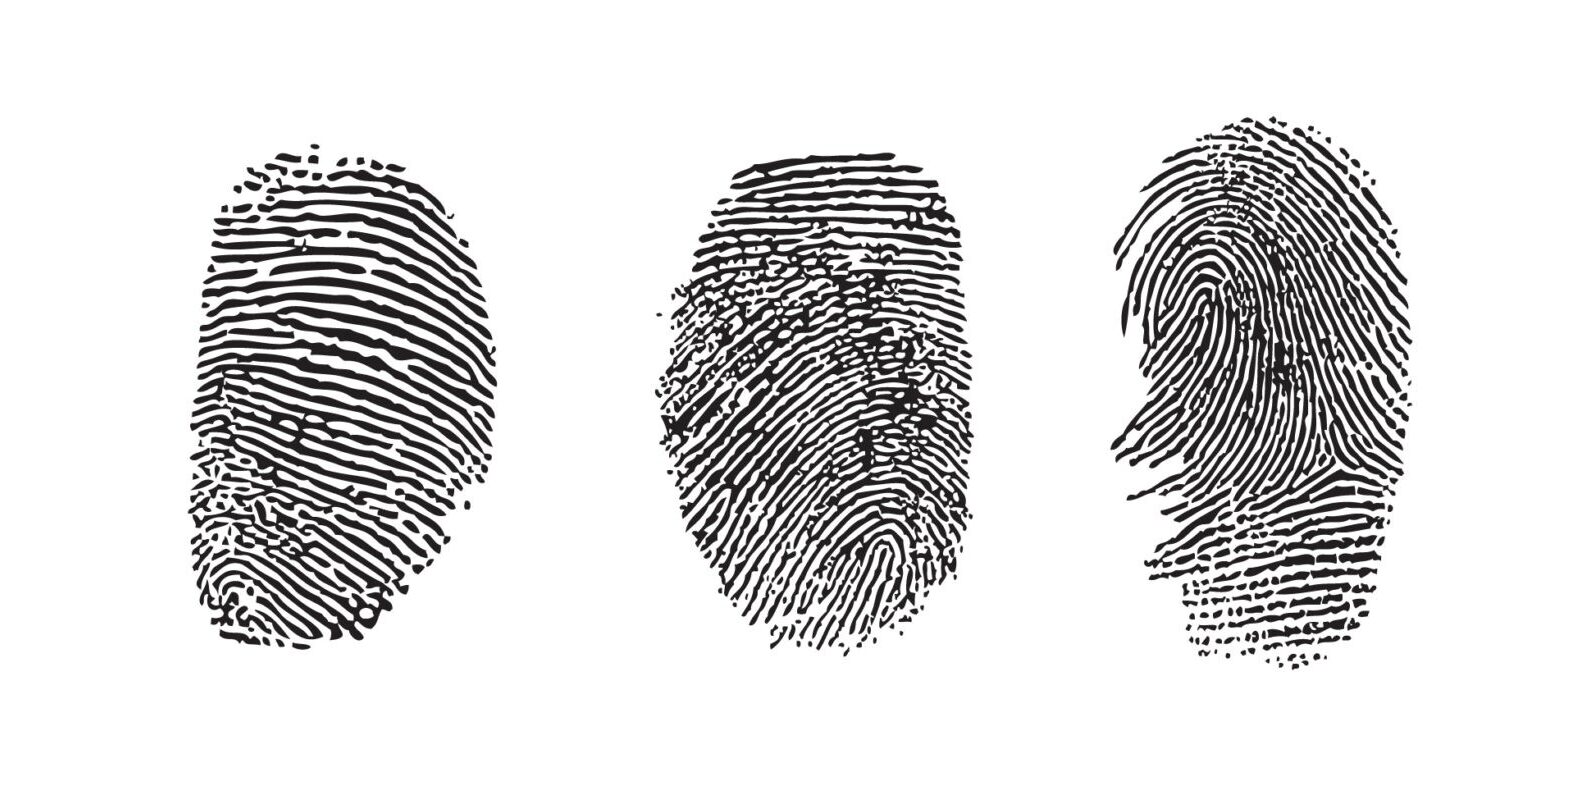 Can fingerprints be stolen